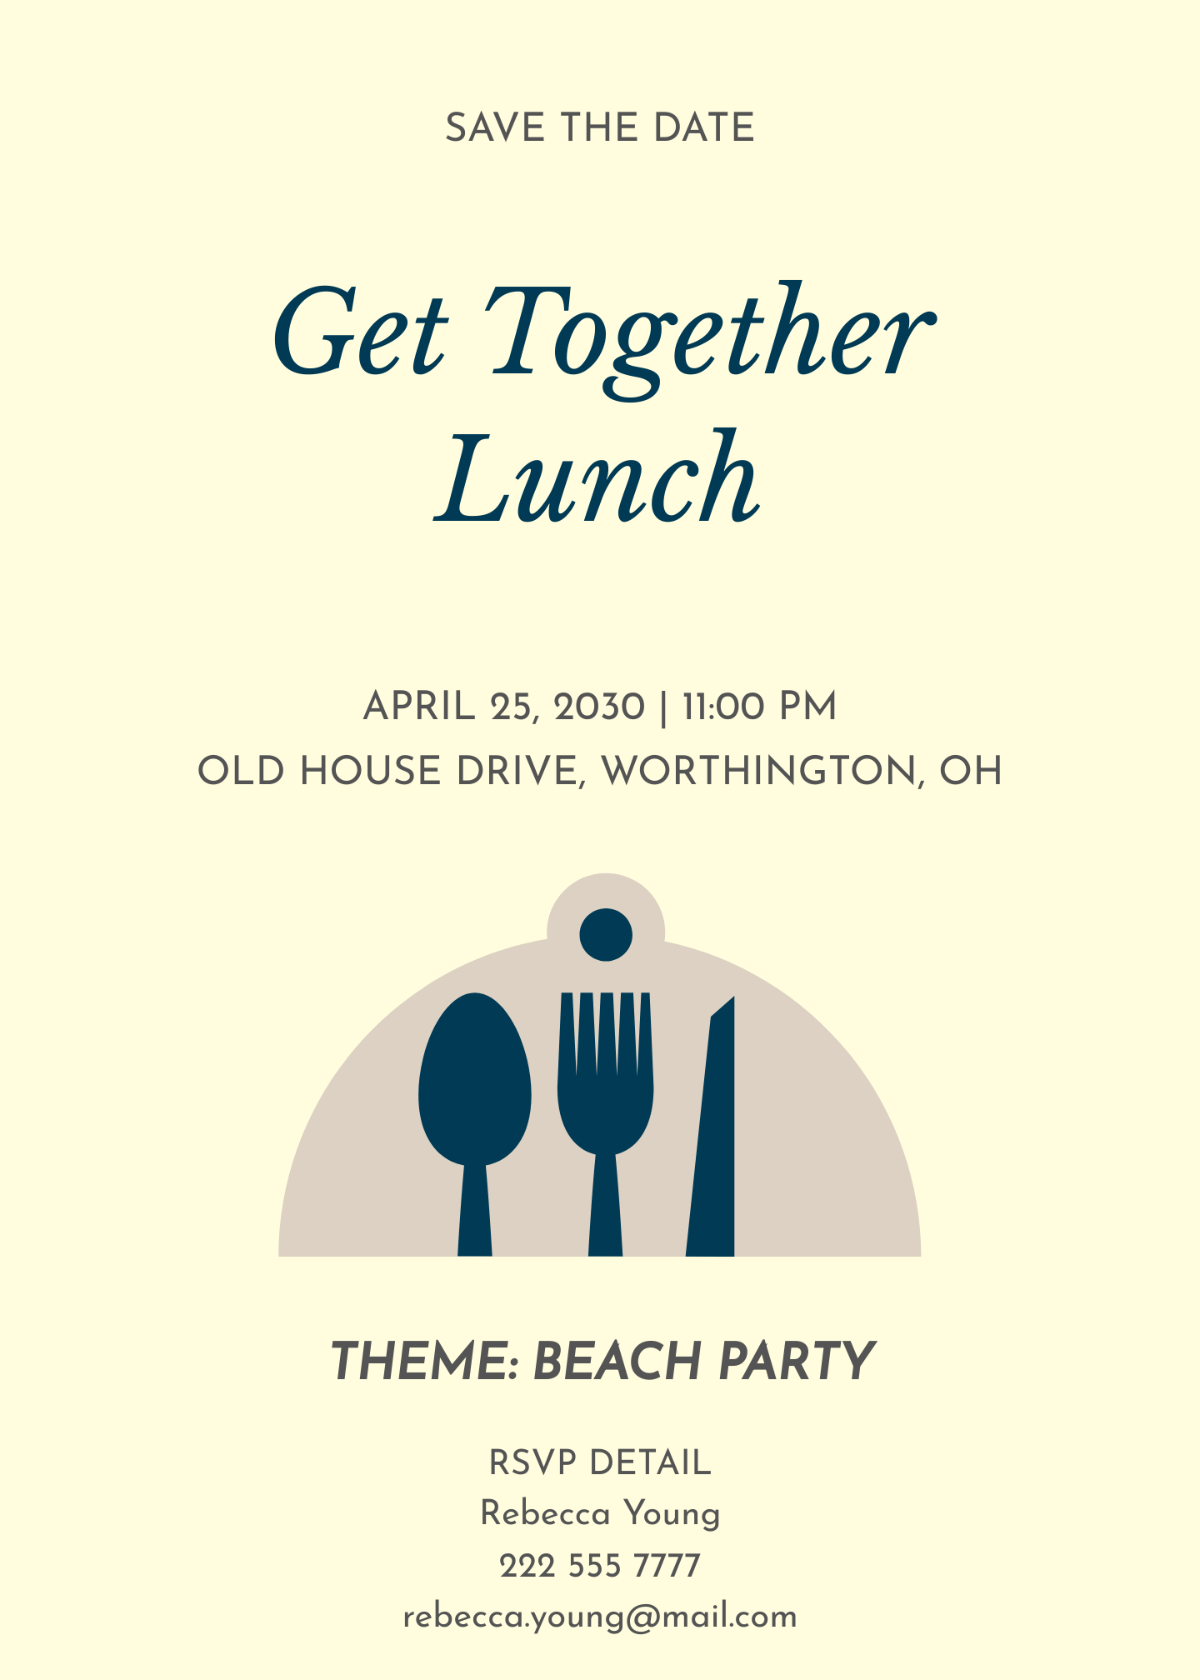 Get Together Lunch Invitation